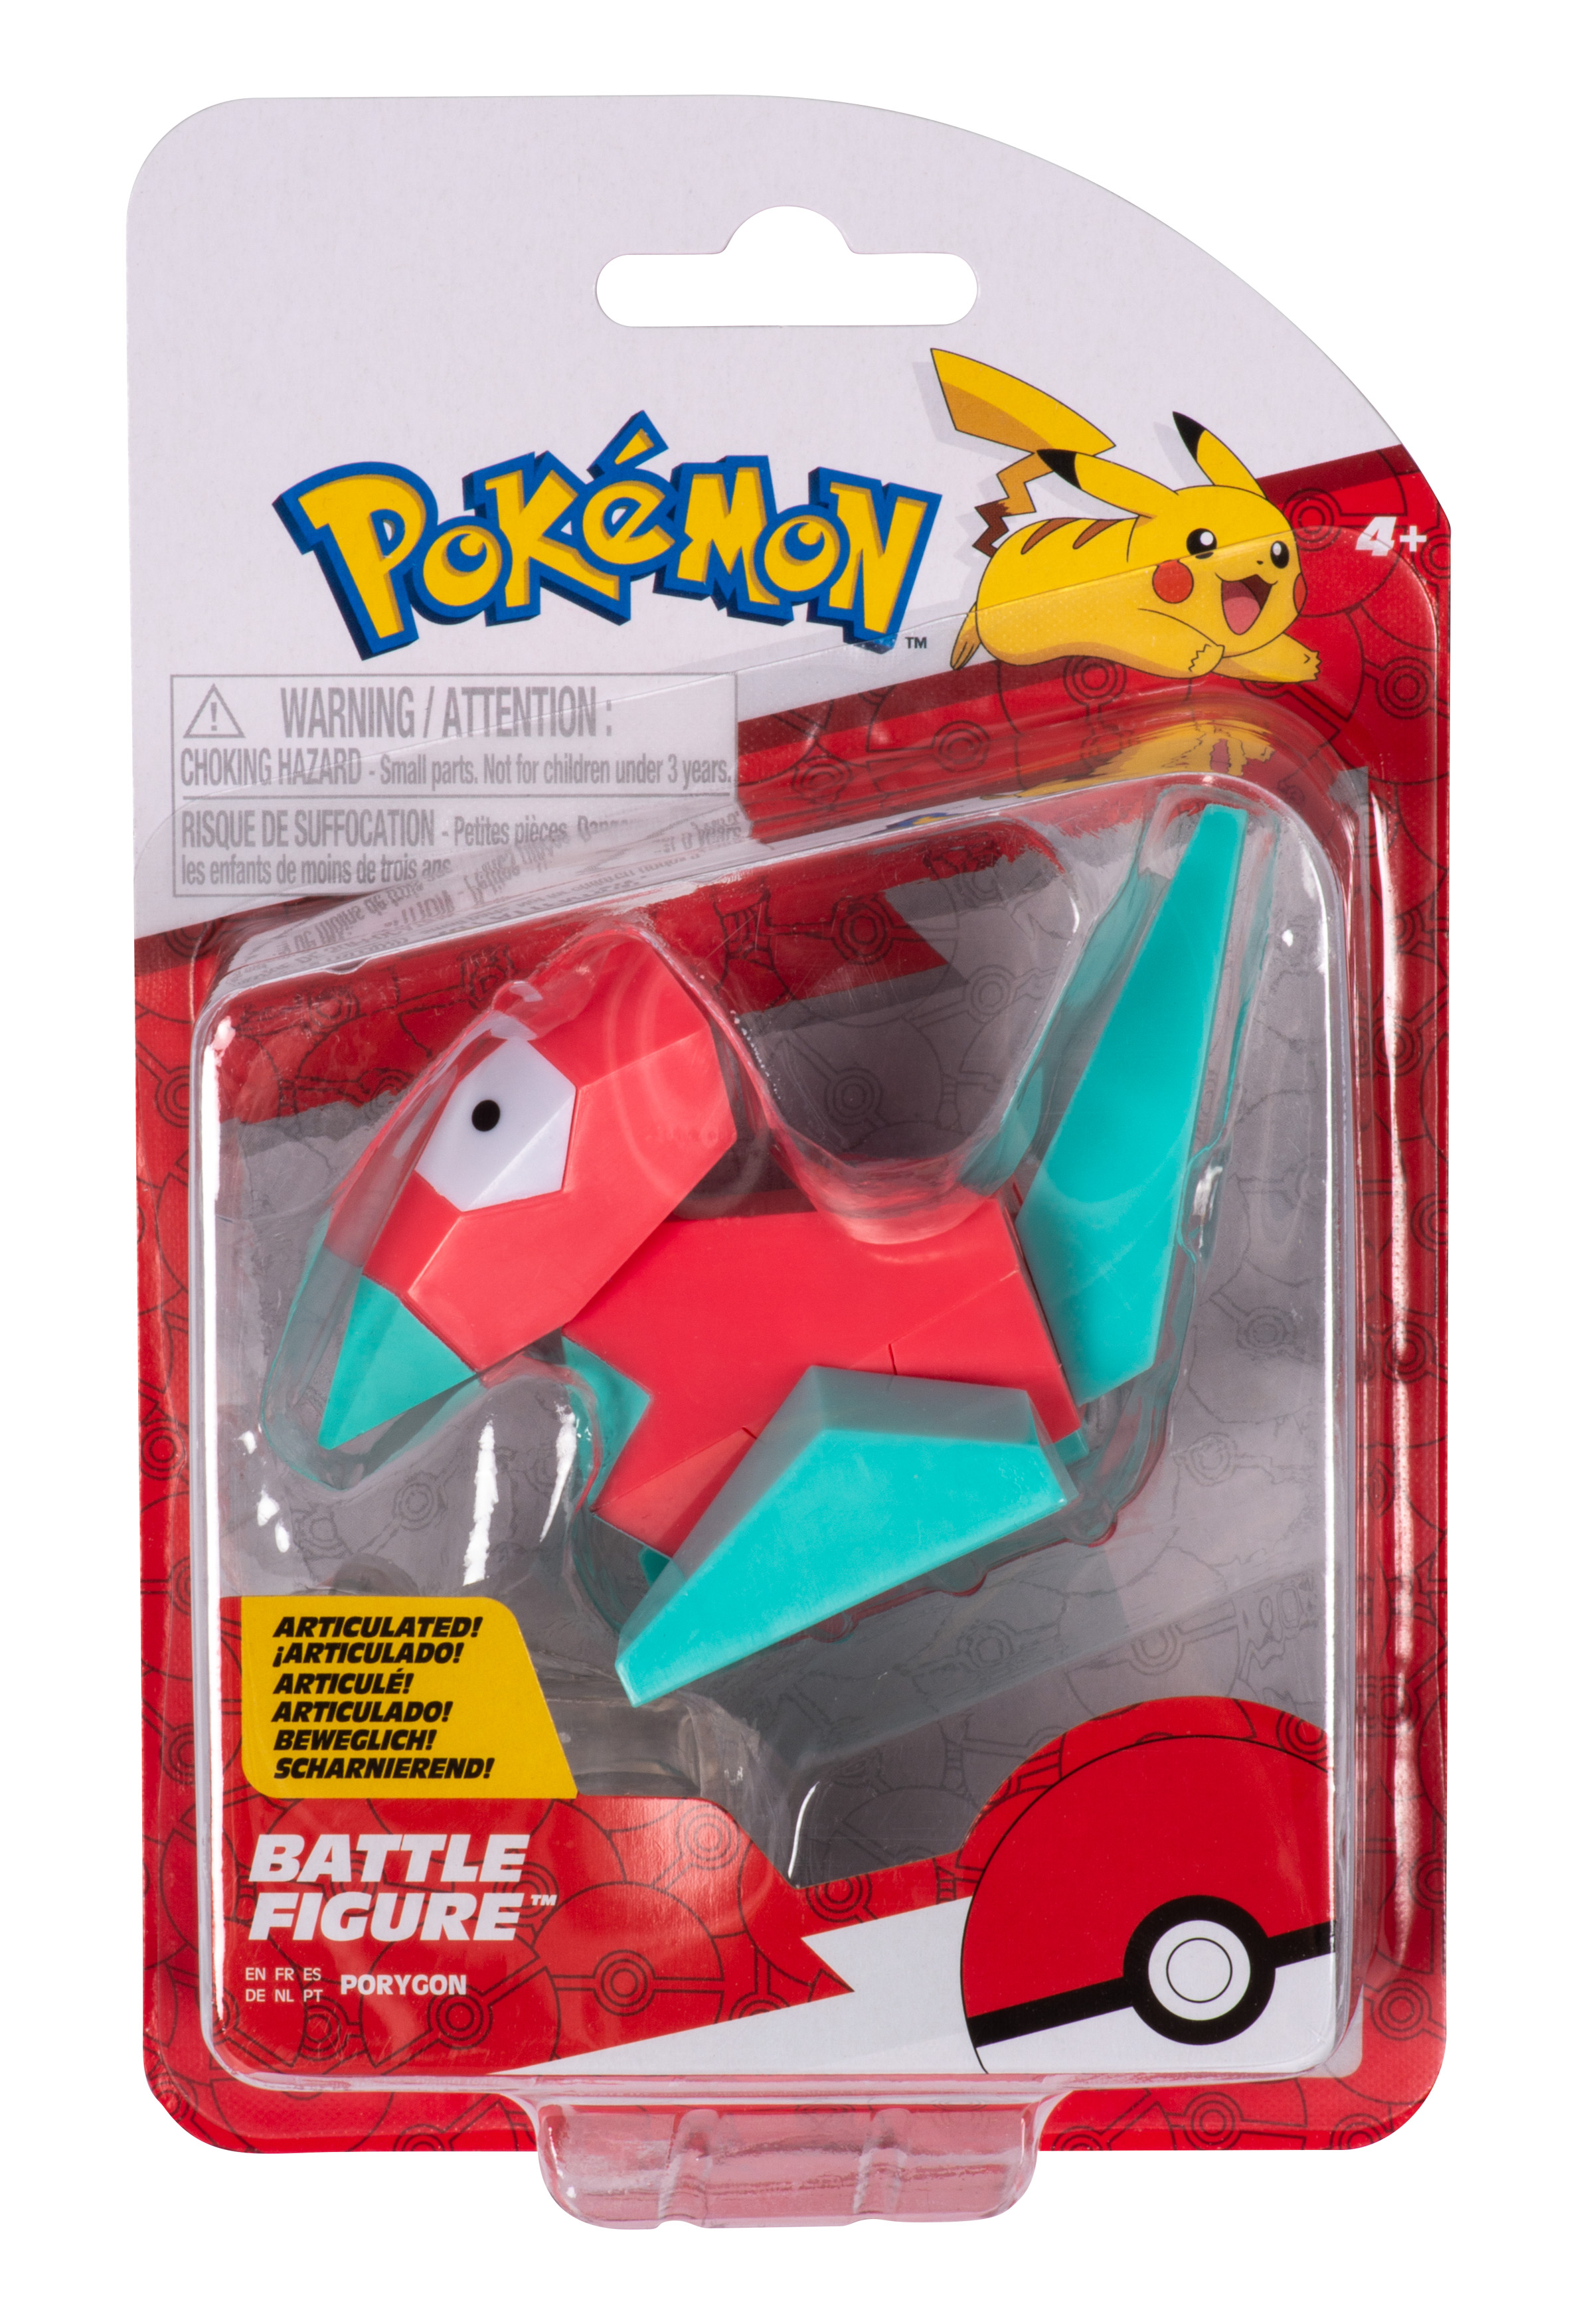 Pokémon - Battle Figur -  Porygon